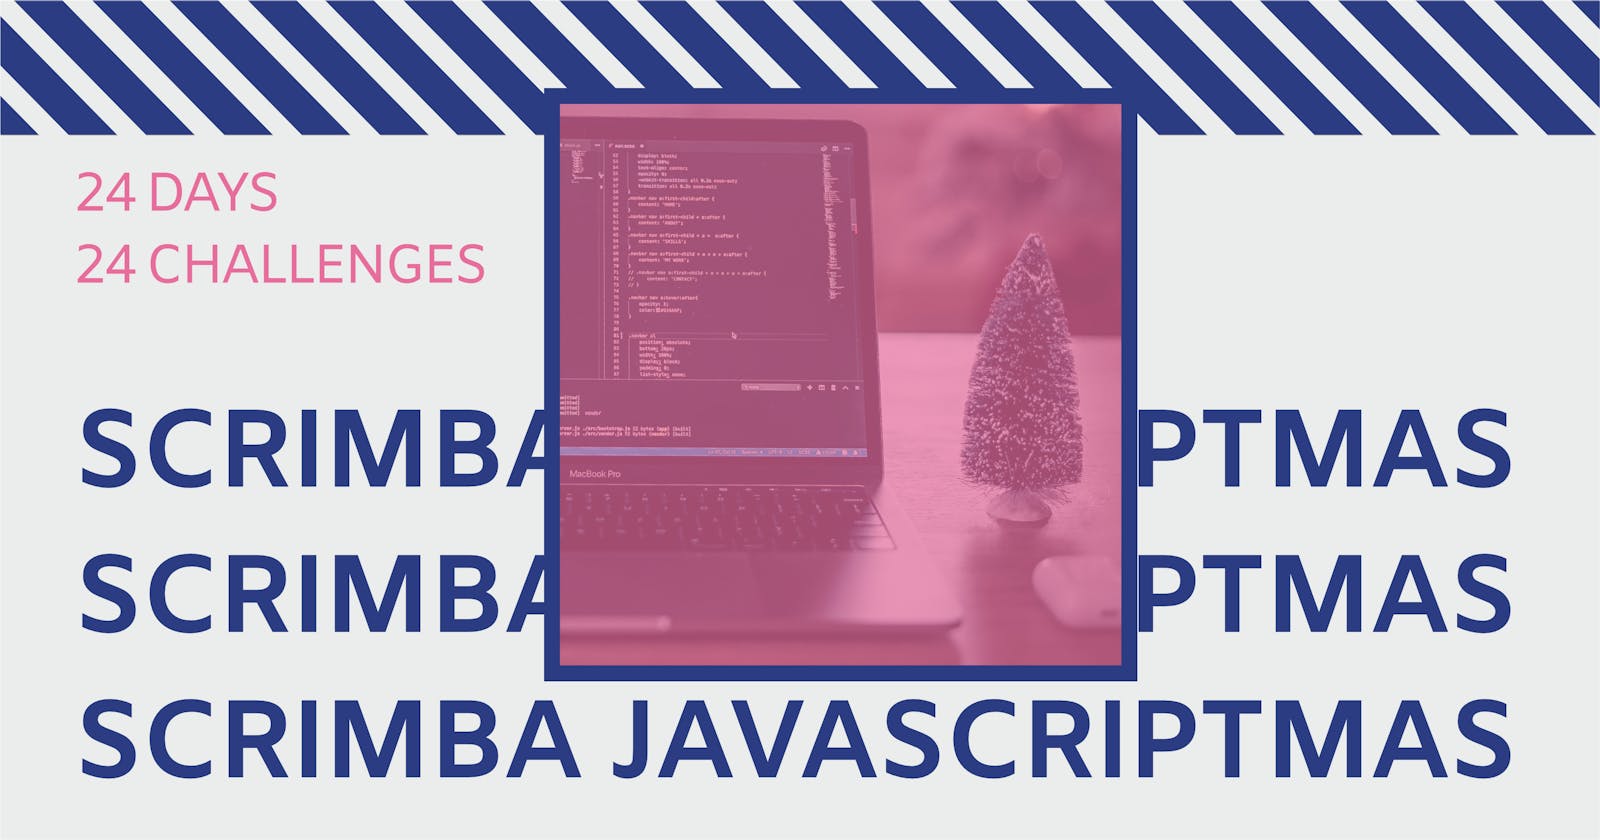 Scrimba's #JavaScriptmas